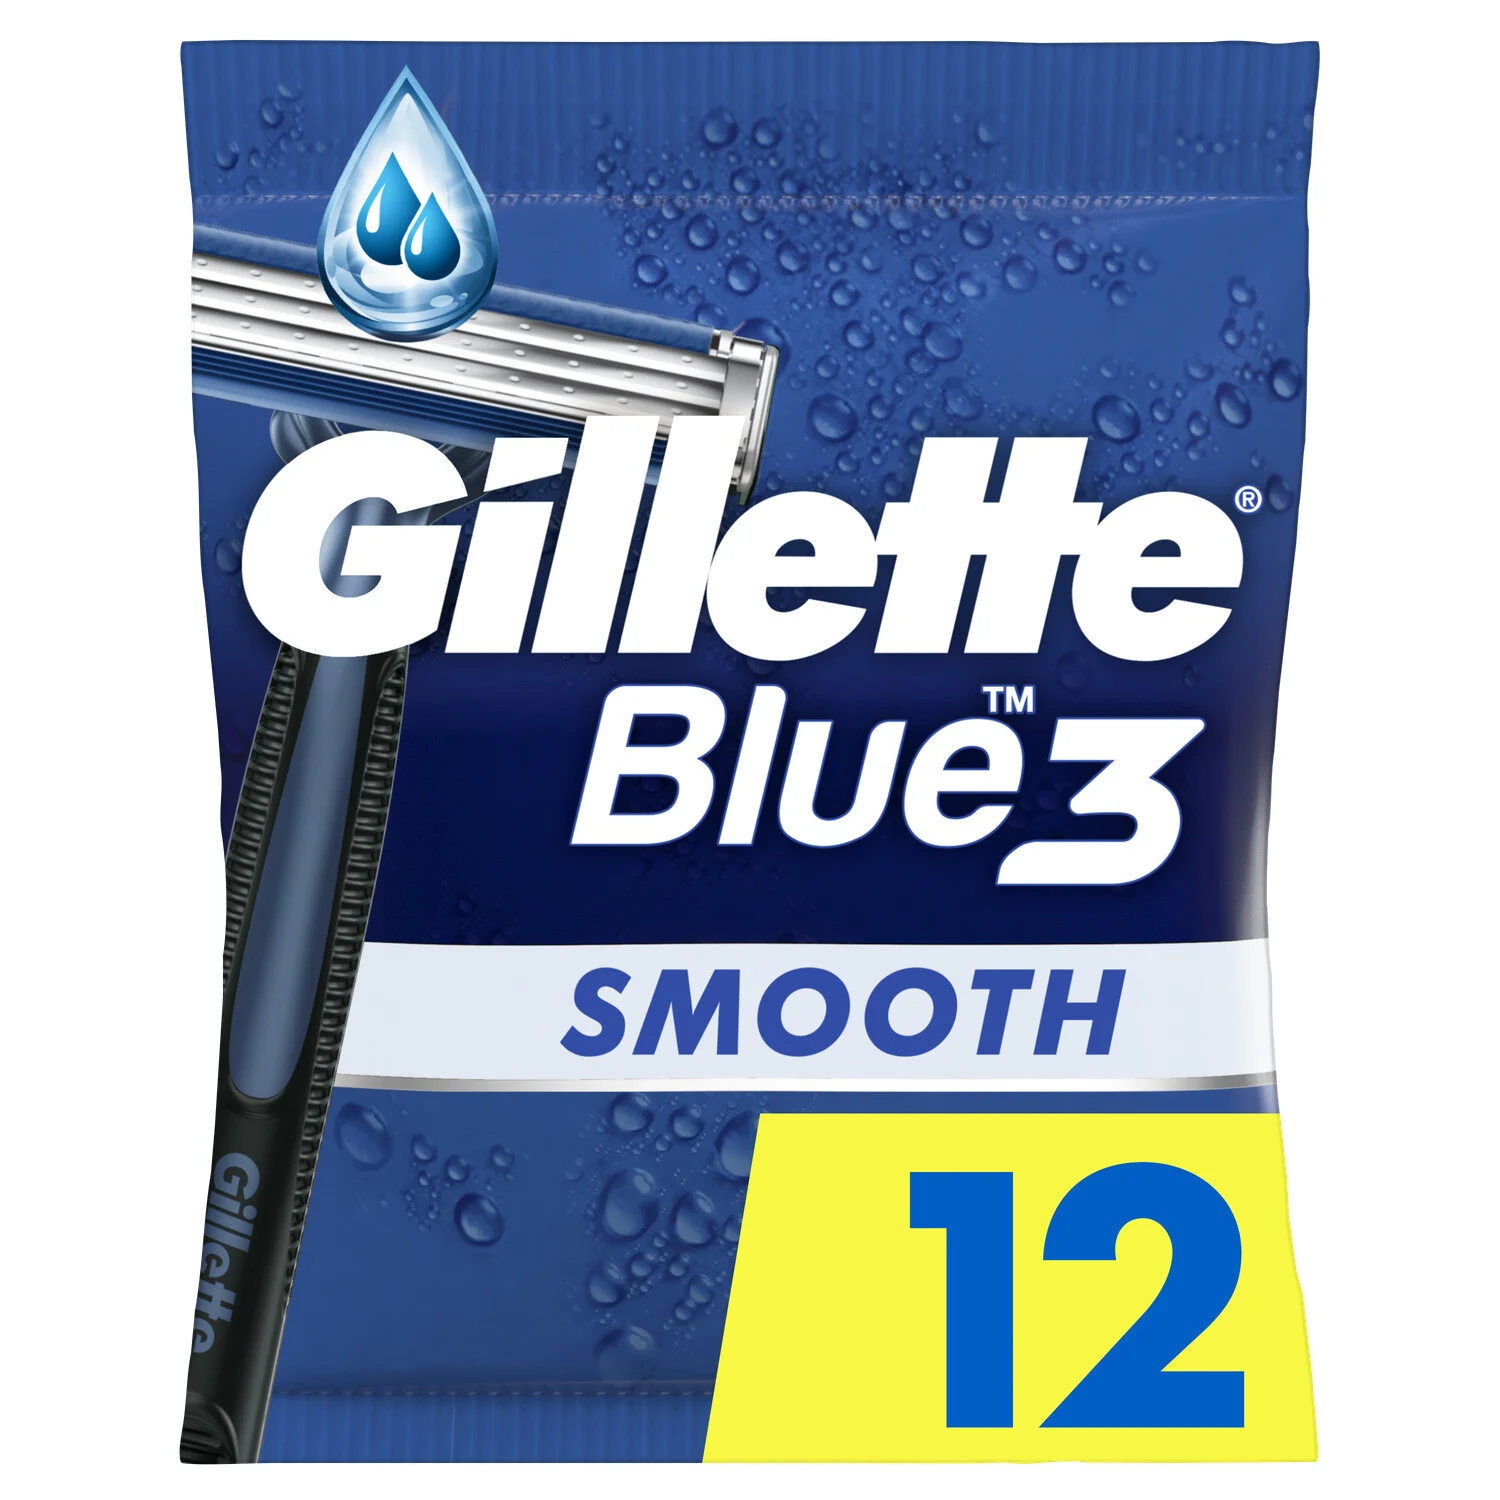 3x4 Jet Smooth Azul3 Gillette